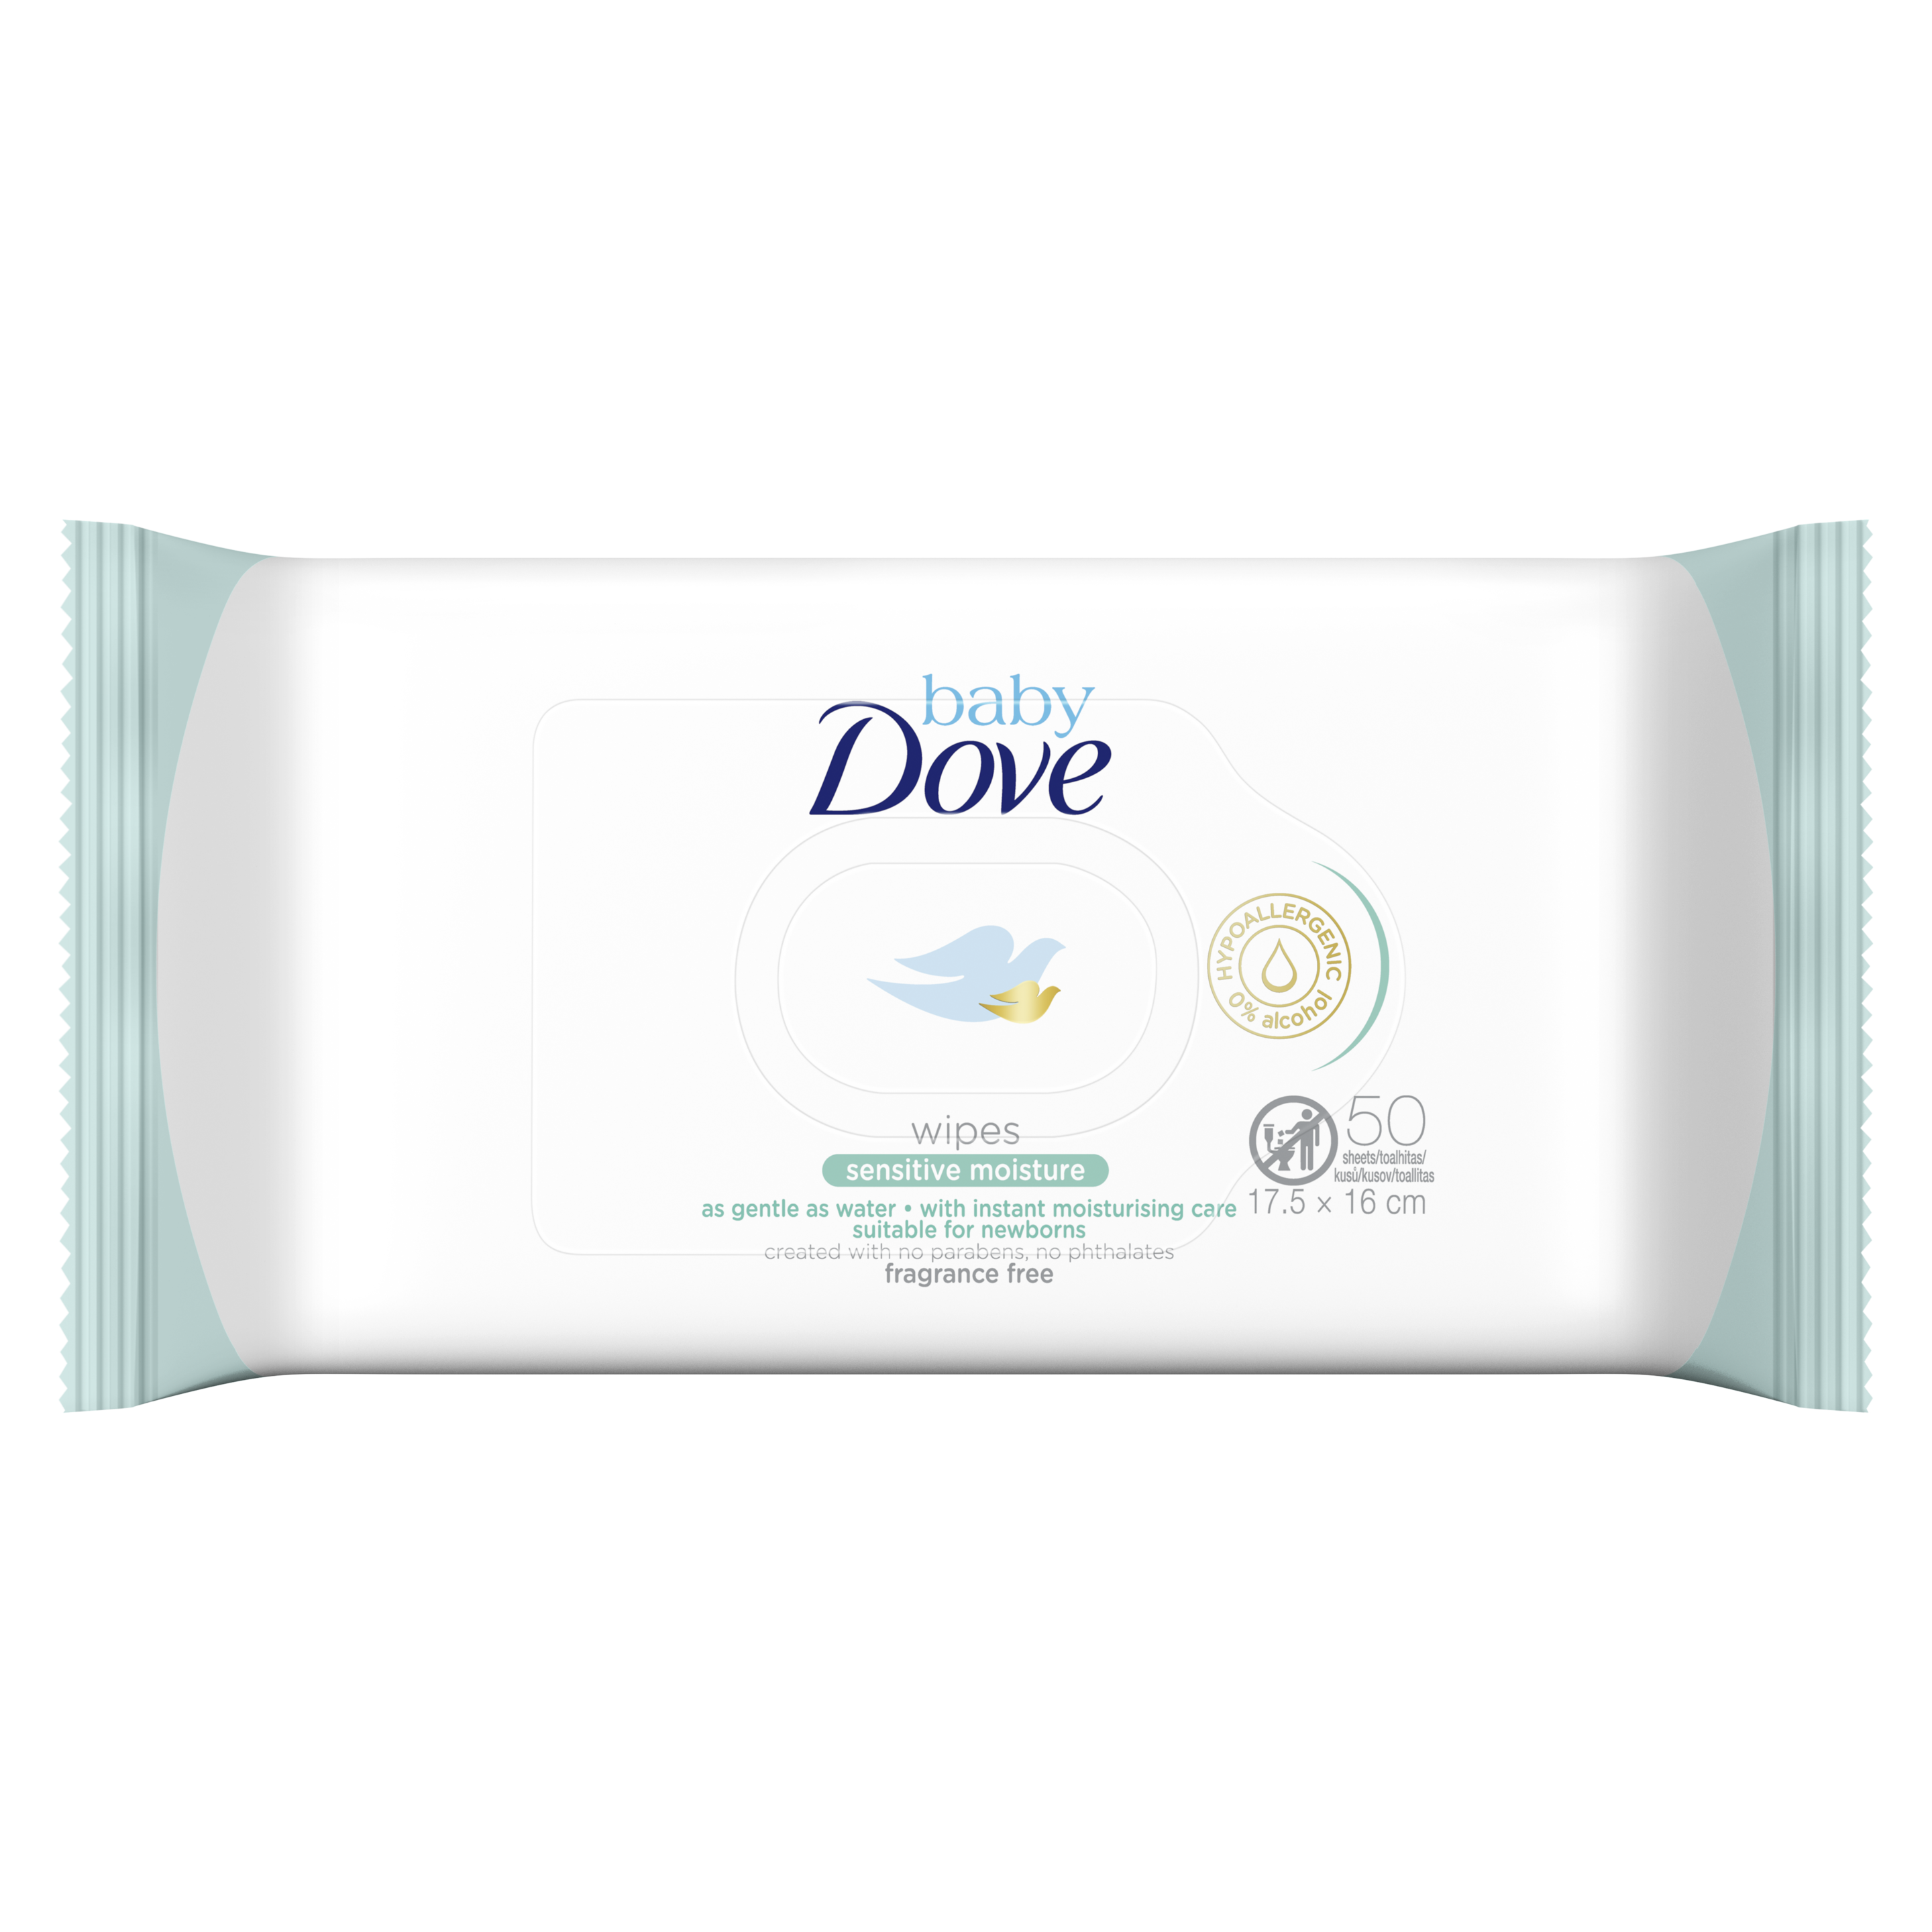 Baby Dove Sensitive Moisture Fragrance Free Wipes 50 units